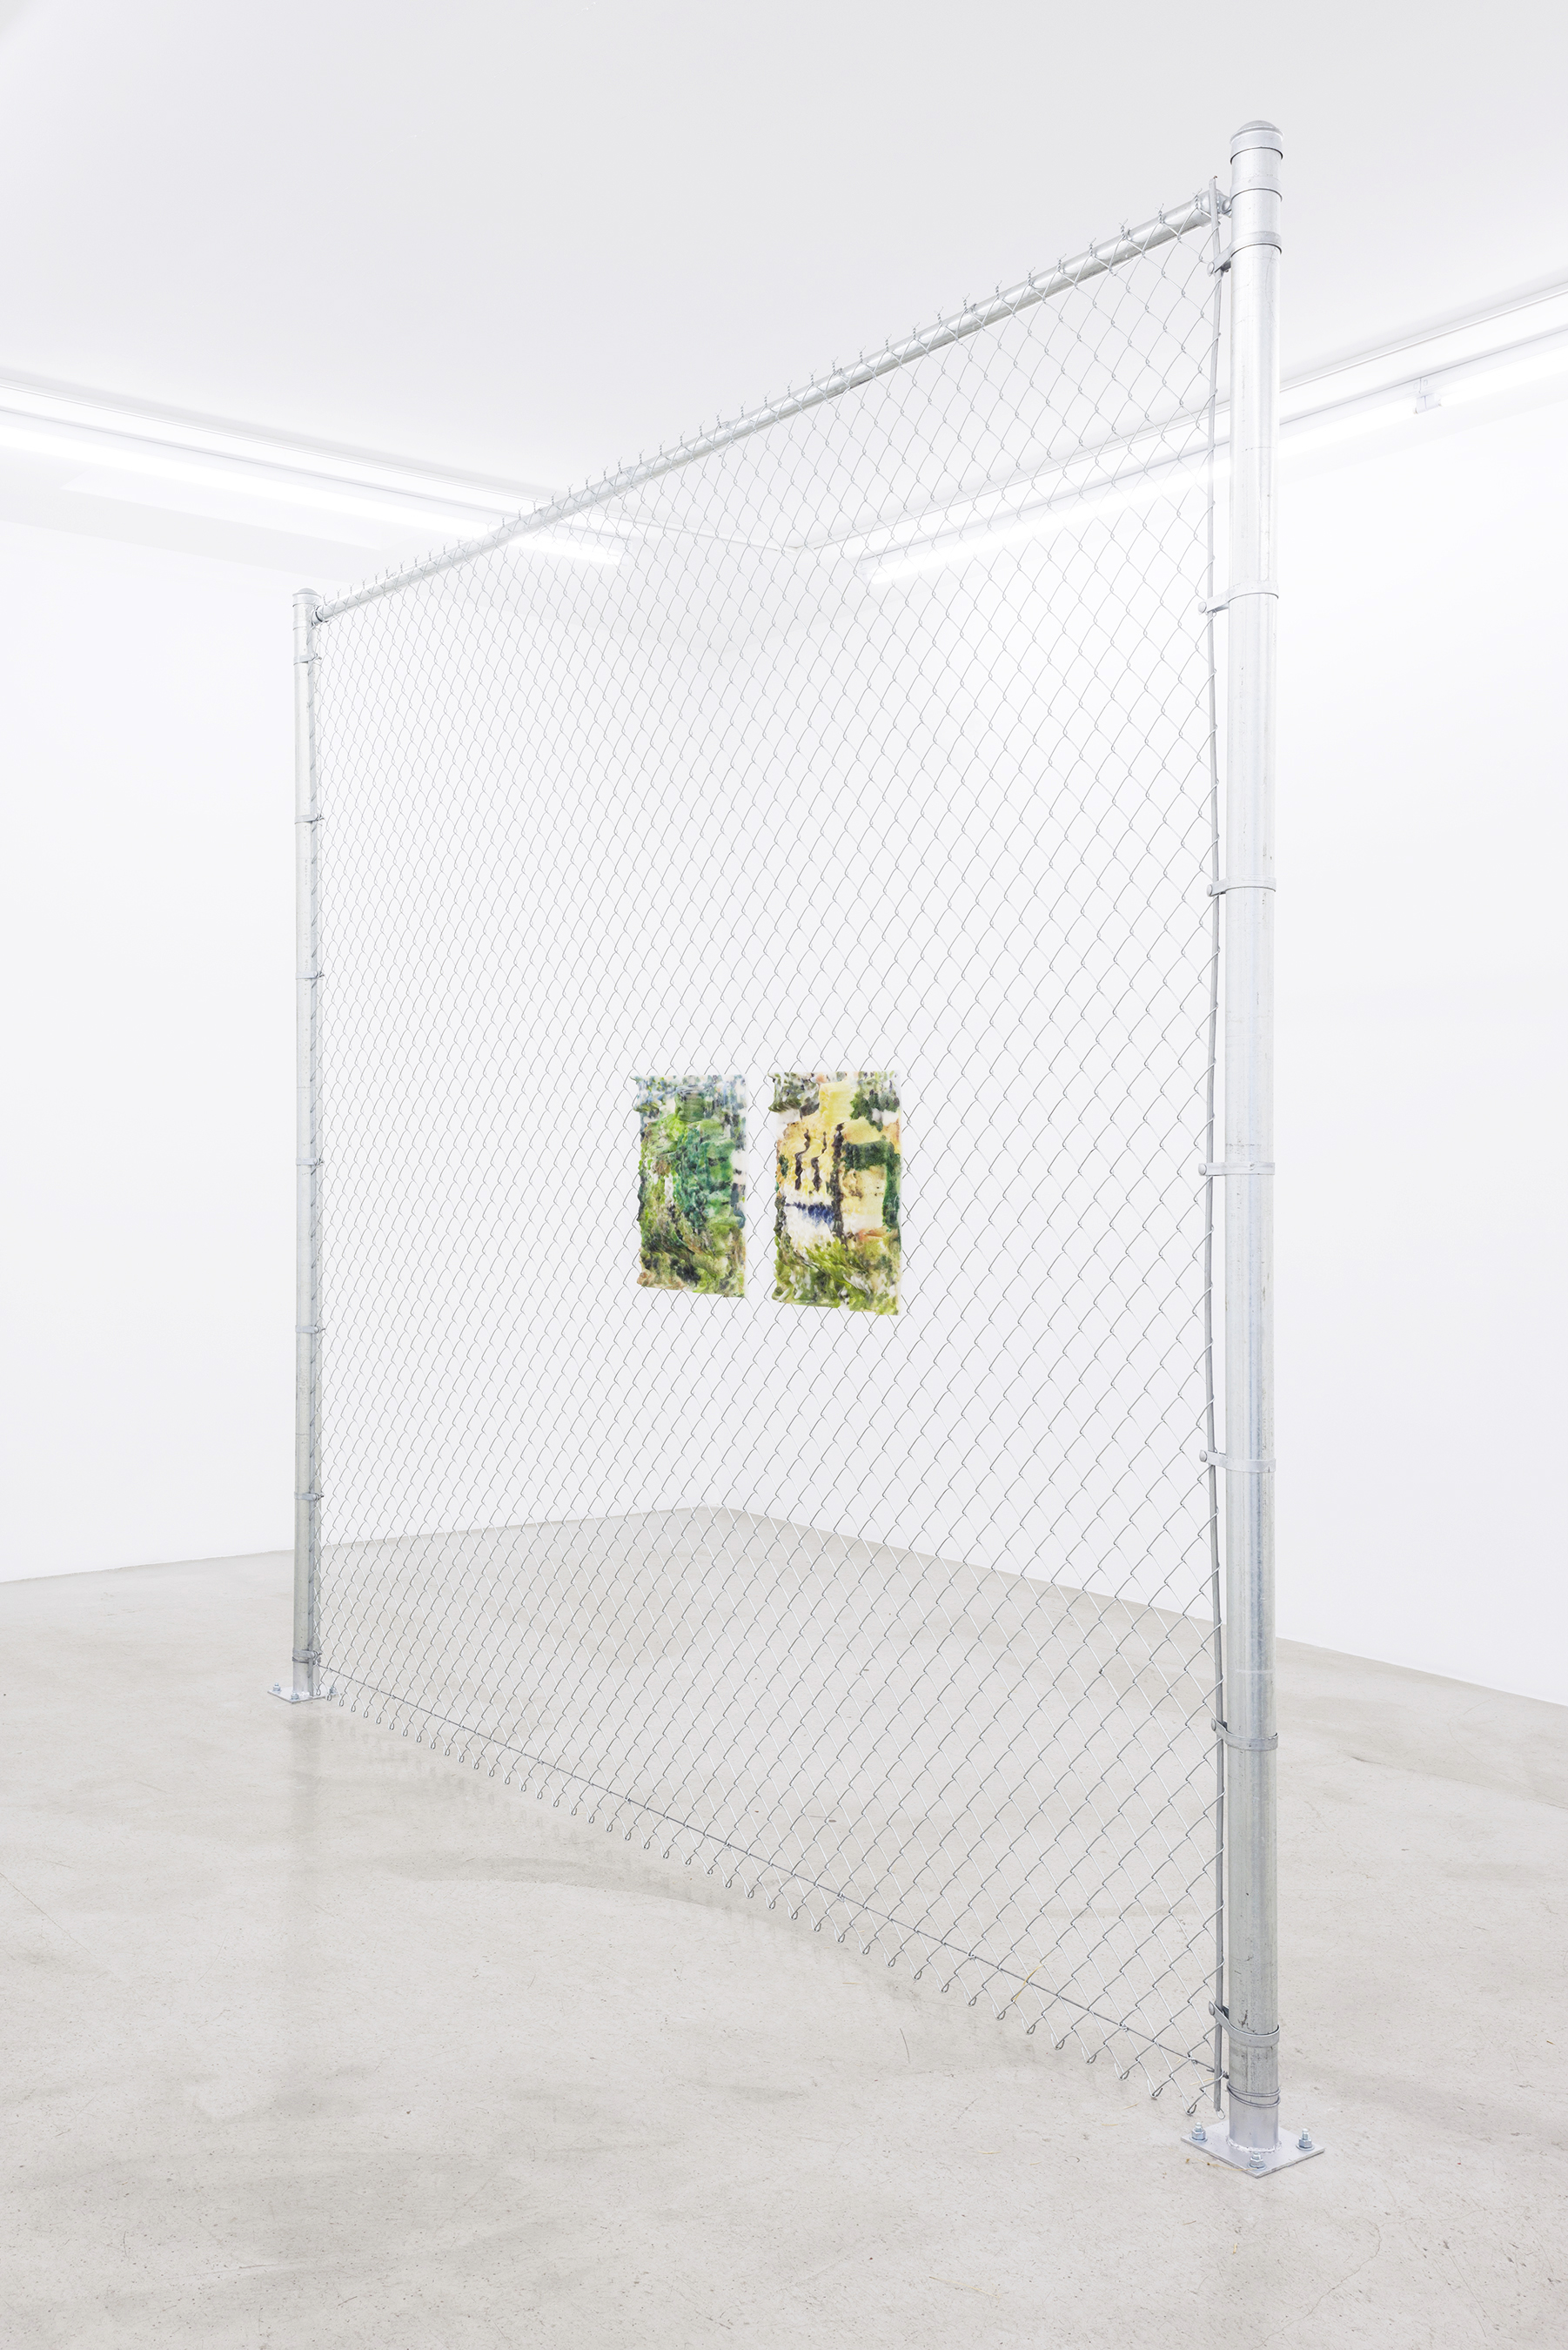  Dwyer Kilcollin THE VIEW Part II M+B Gallery LAXART installation Los Angeles 